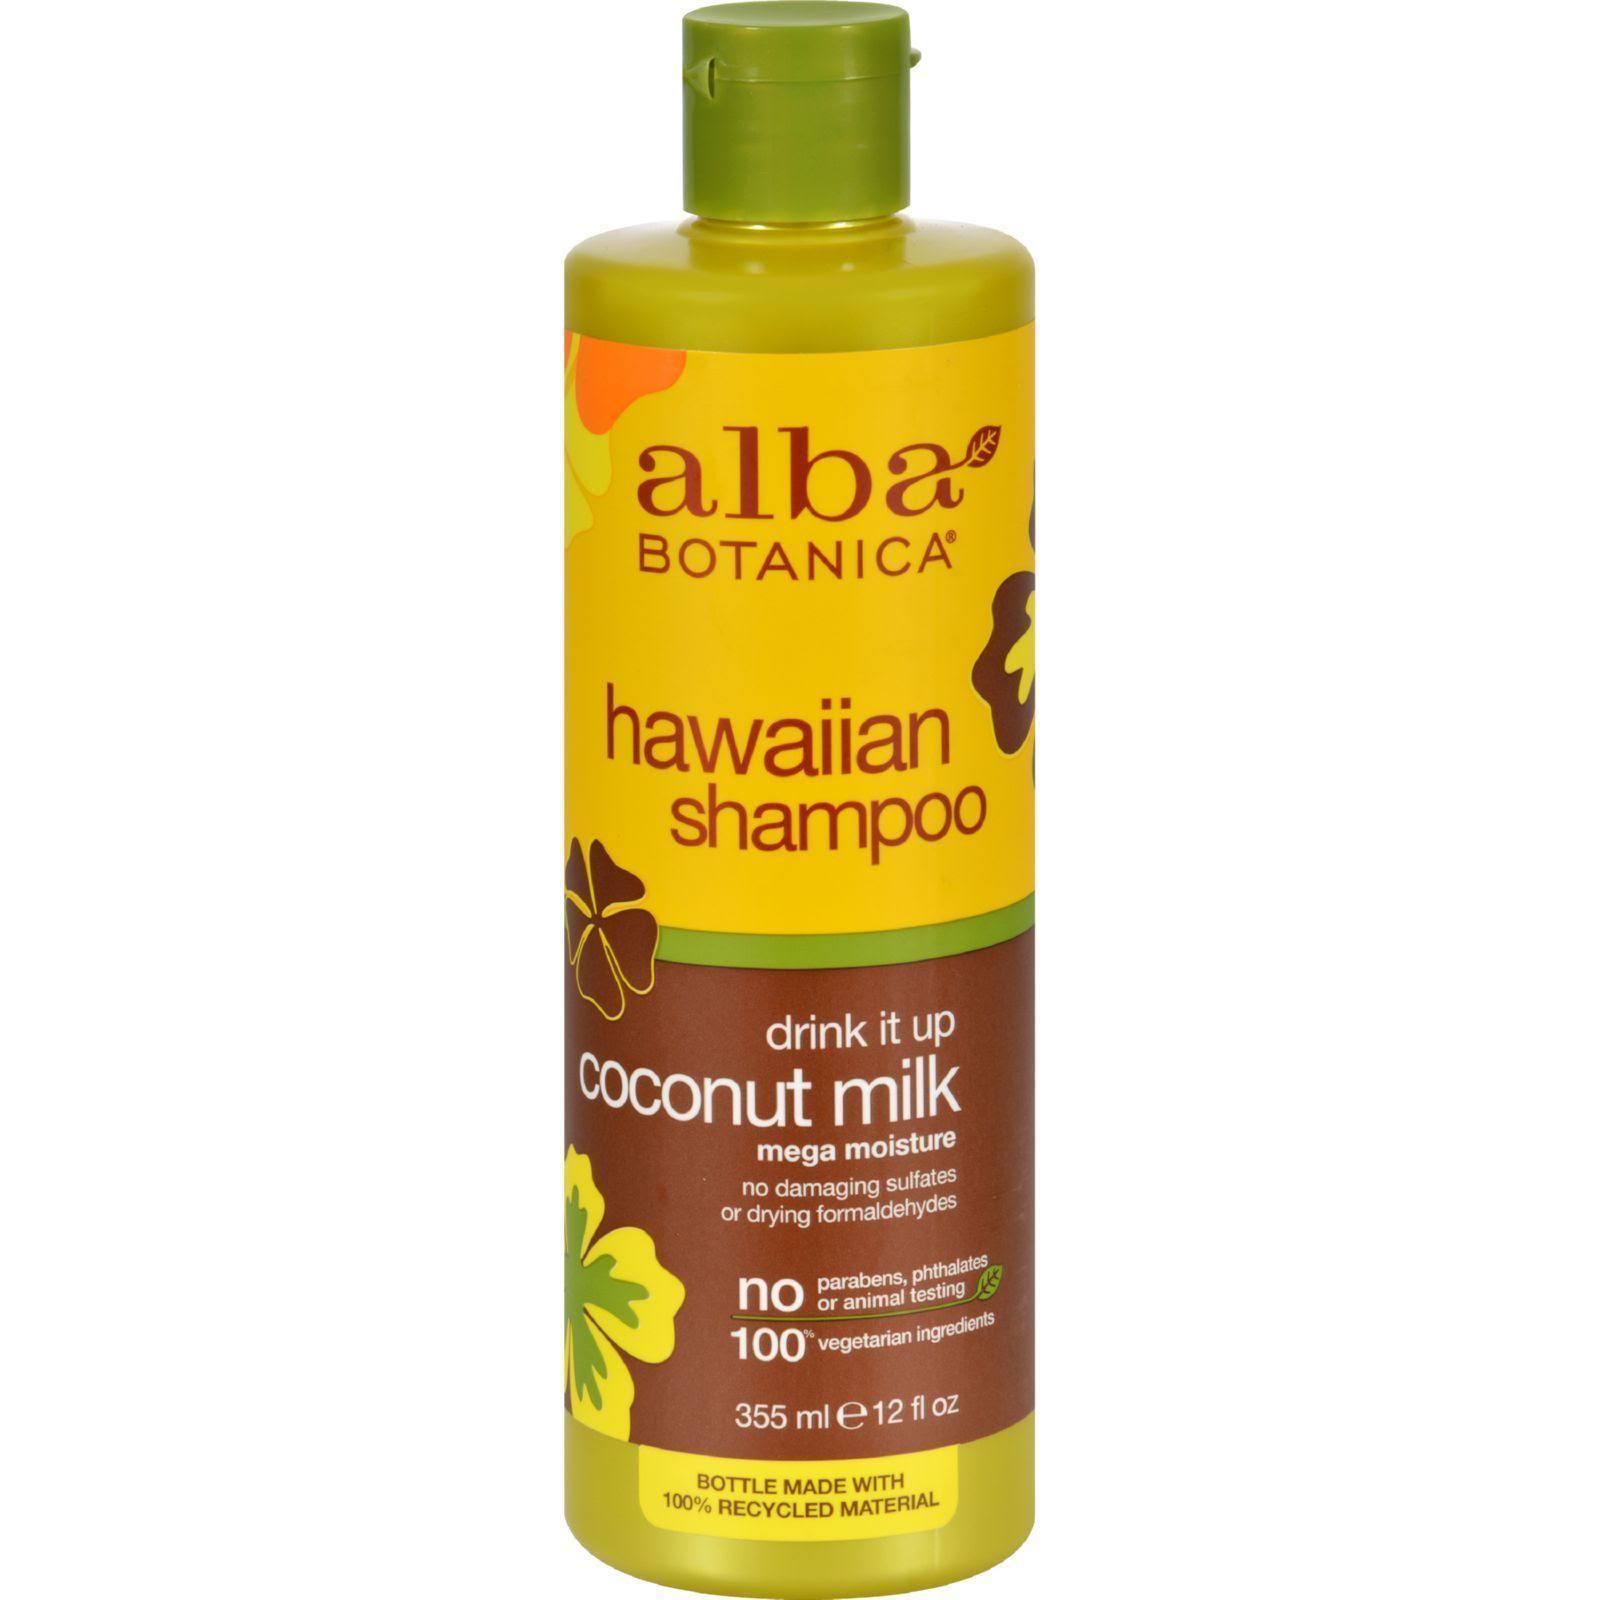 Alba Botanica Hawaiian Shampoo - Coconut Milk, 355ml